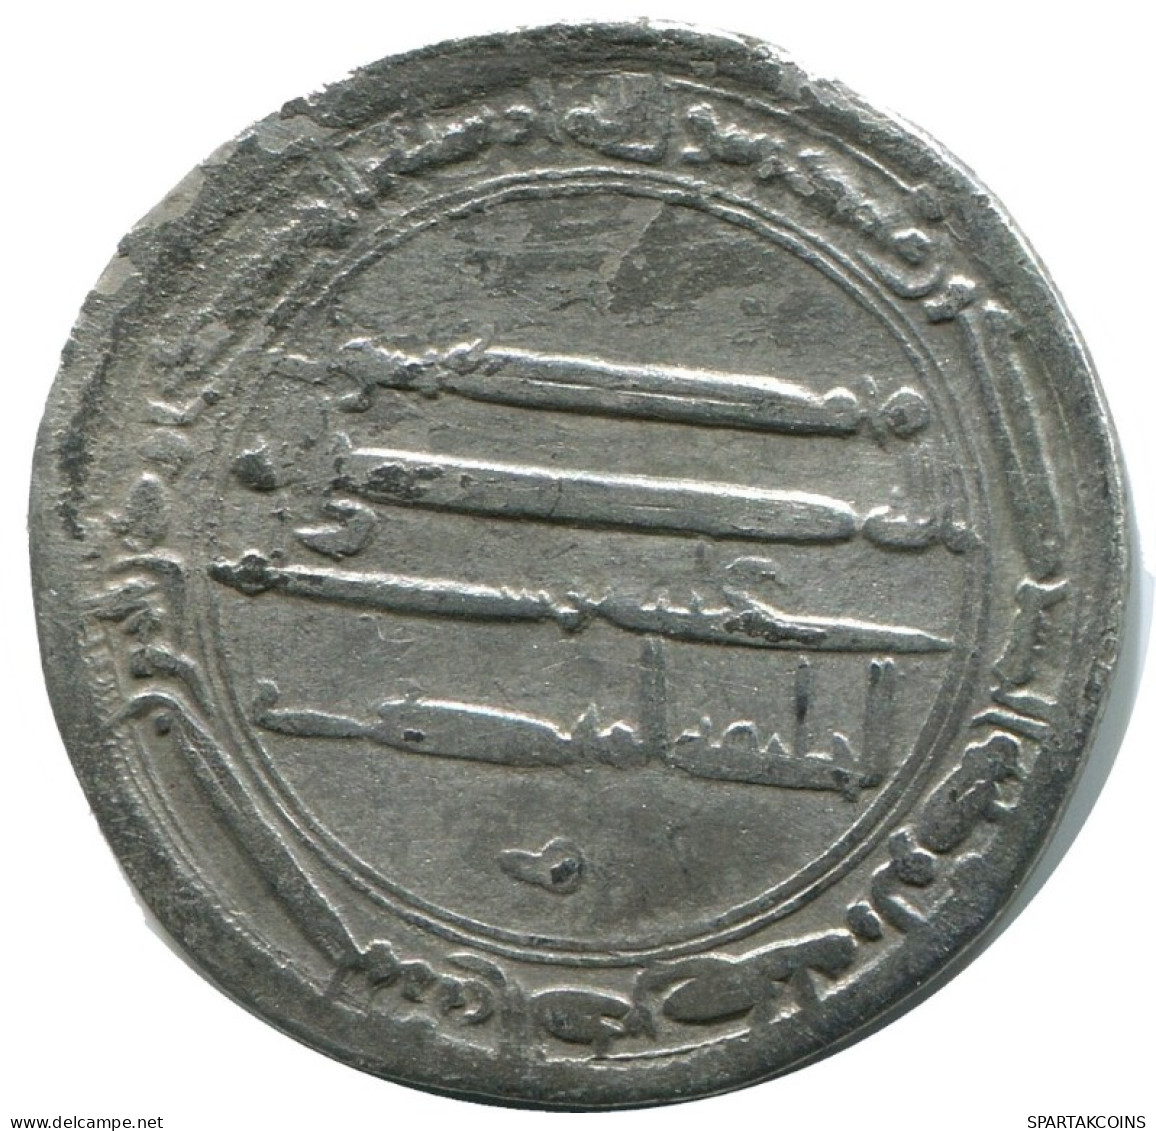 UMAYYAD CALIPHATE Silver DIRHAM Medieval Islamic Coin #AH168.45.D.A - Orientales